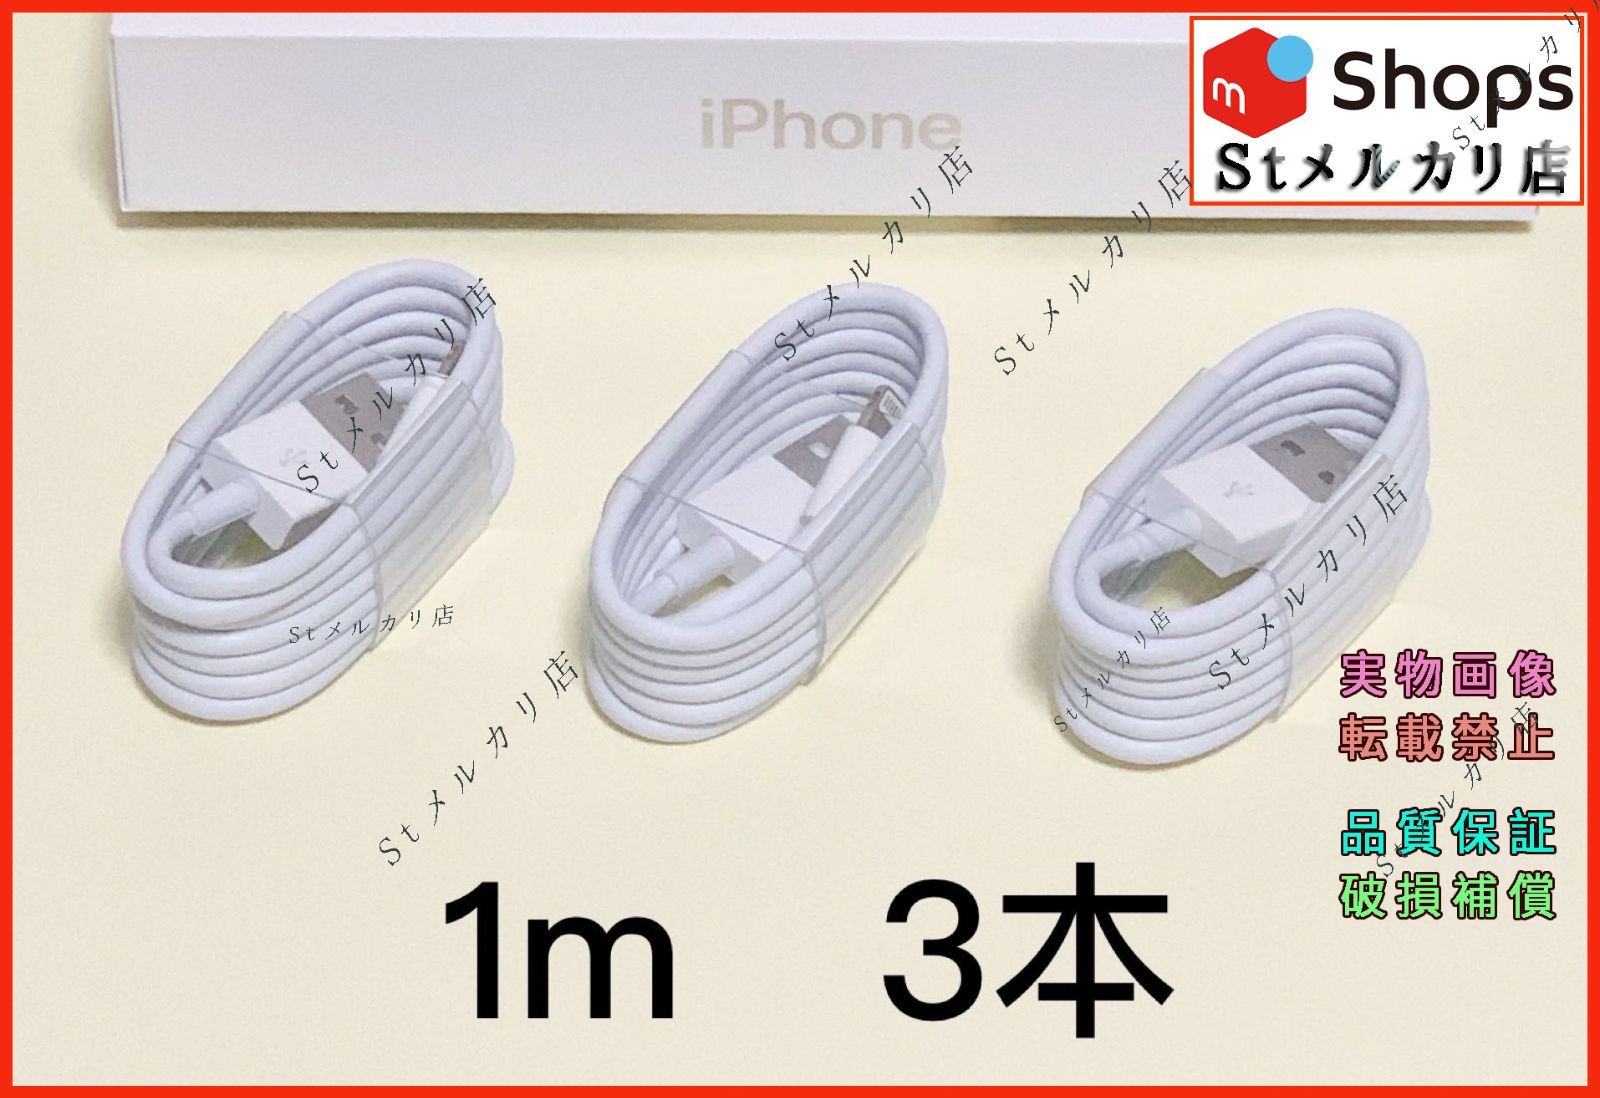 1m 3本 iPhone ライトニングケーブル USB充電器 アイフォンケーブル 純正品同等 新品 St-VY メルカリShops